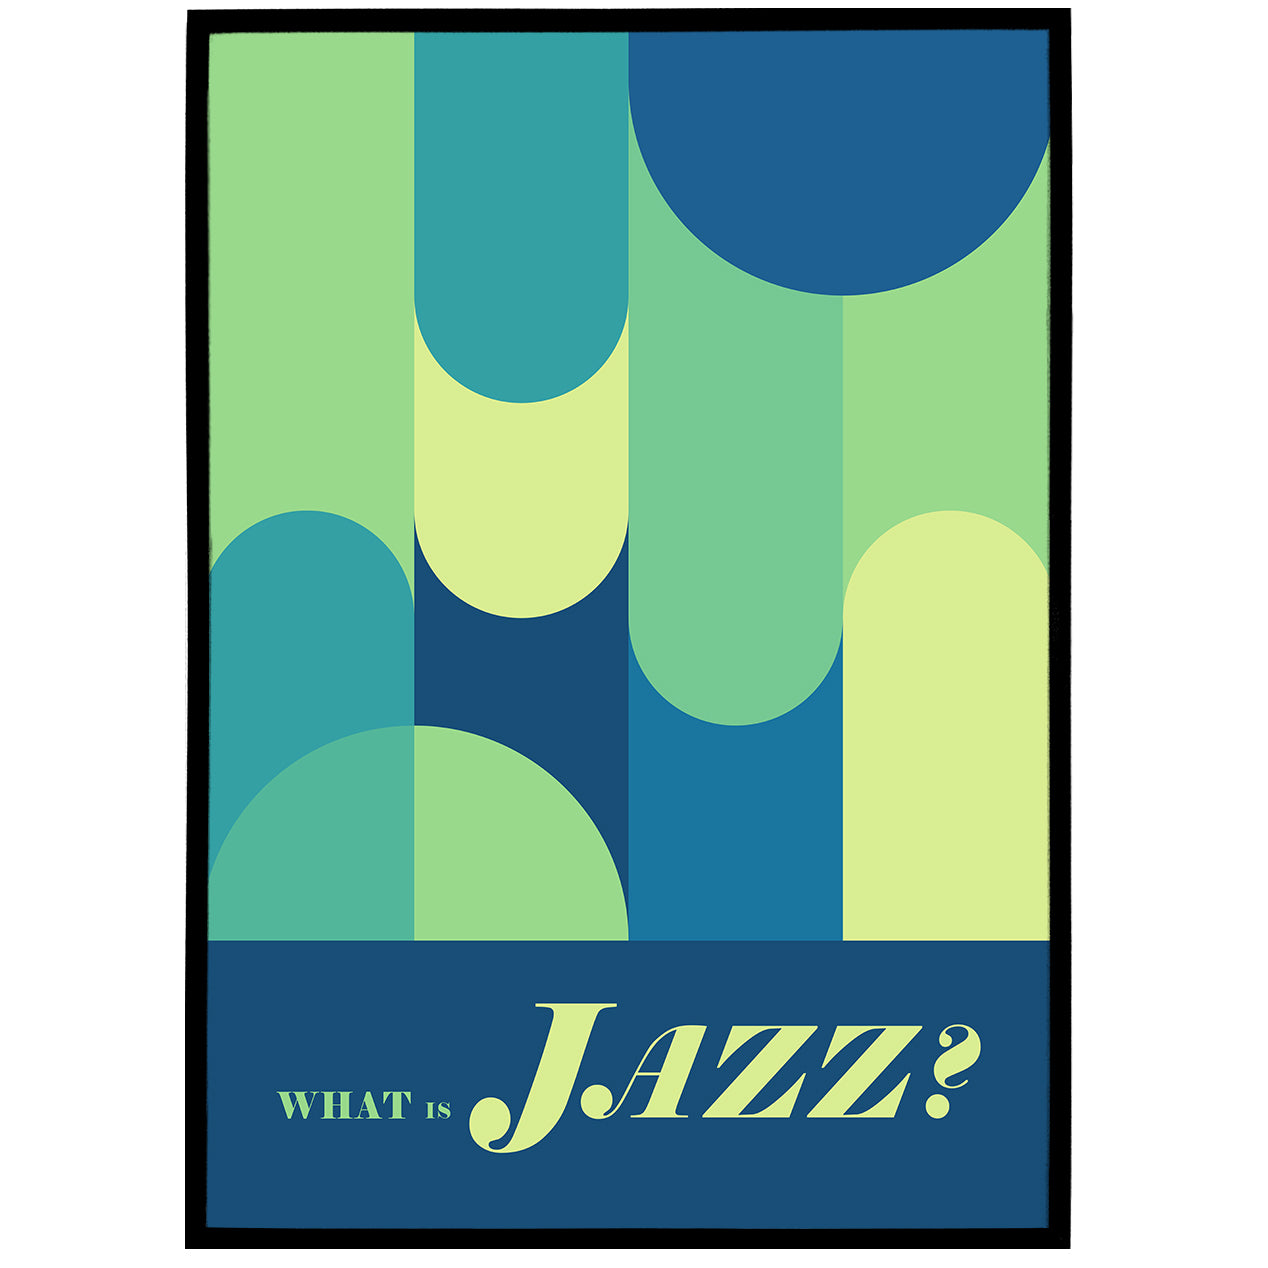 Jazz Music Poster